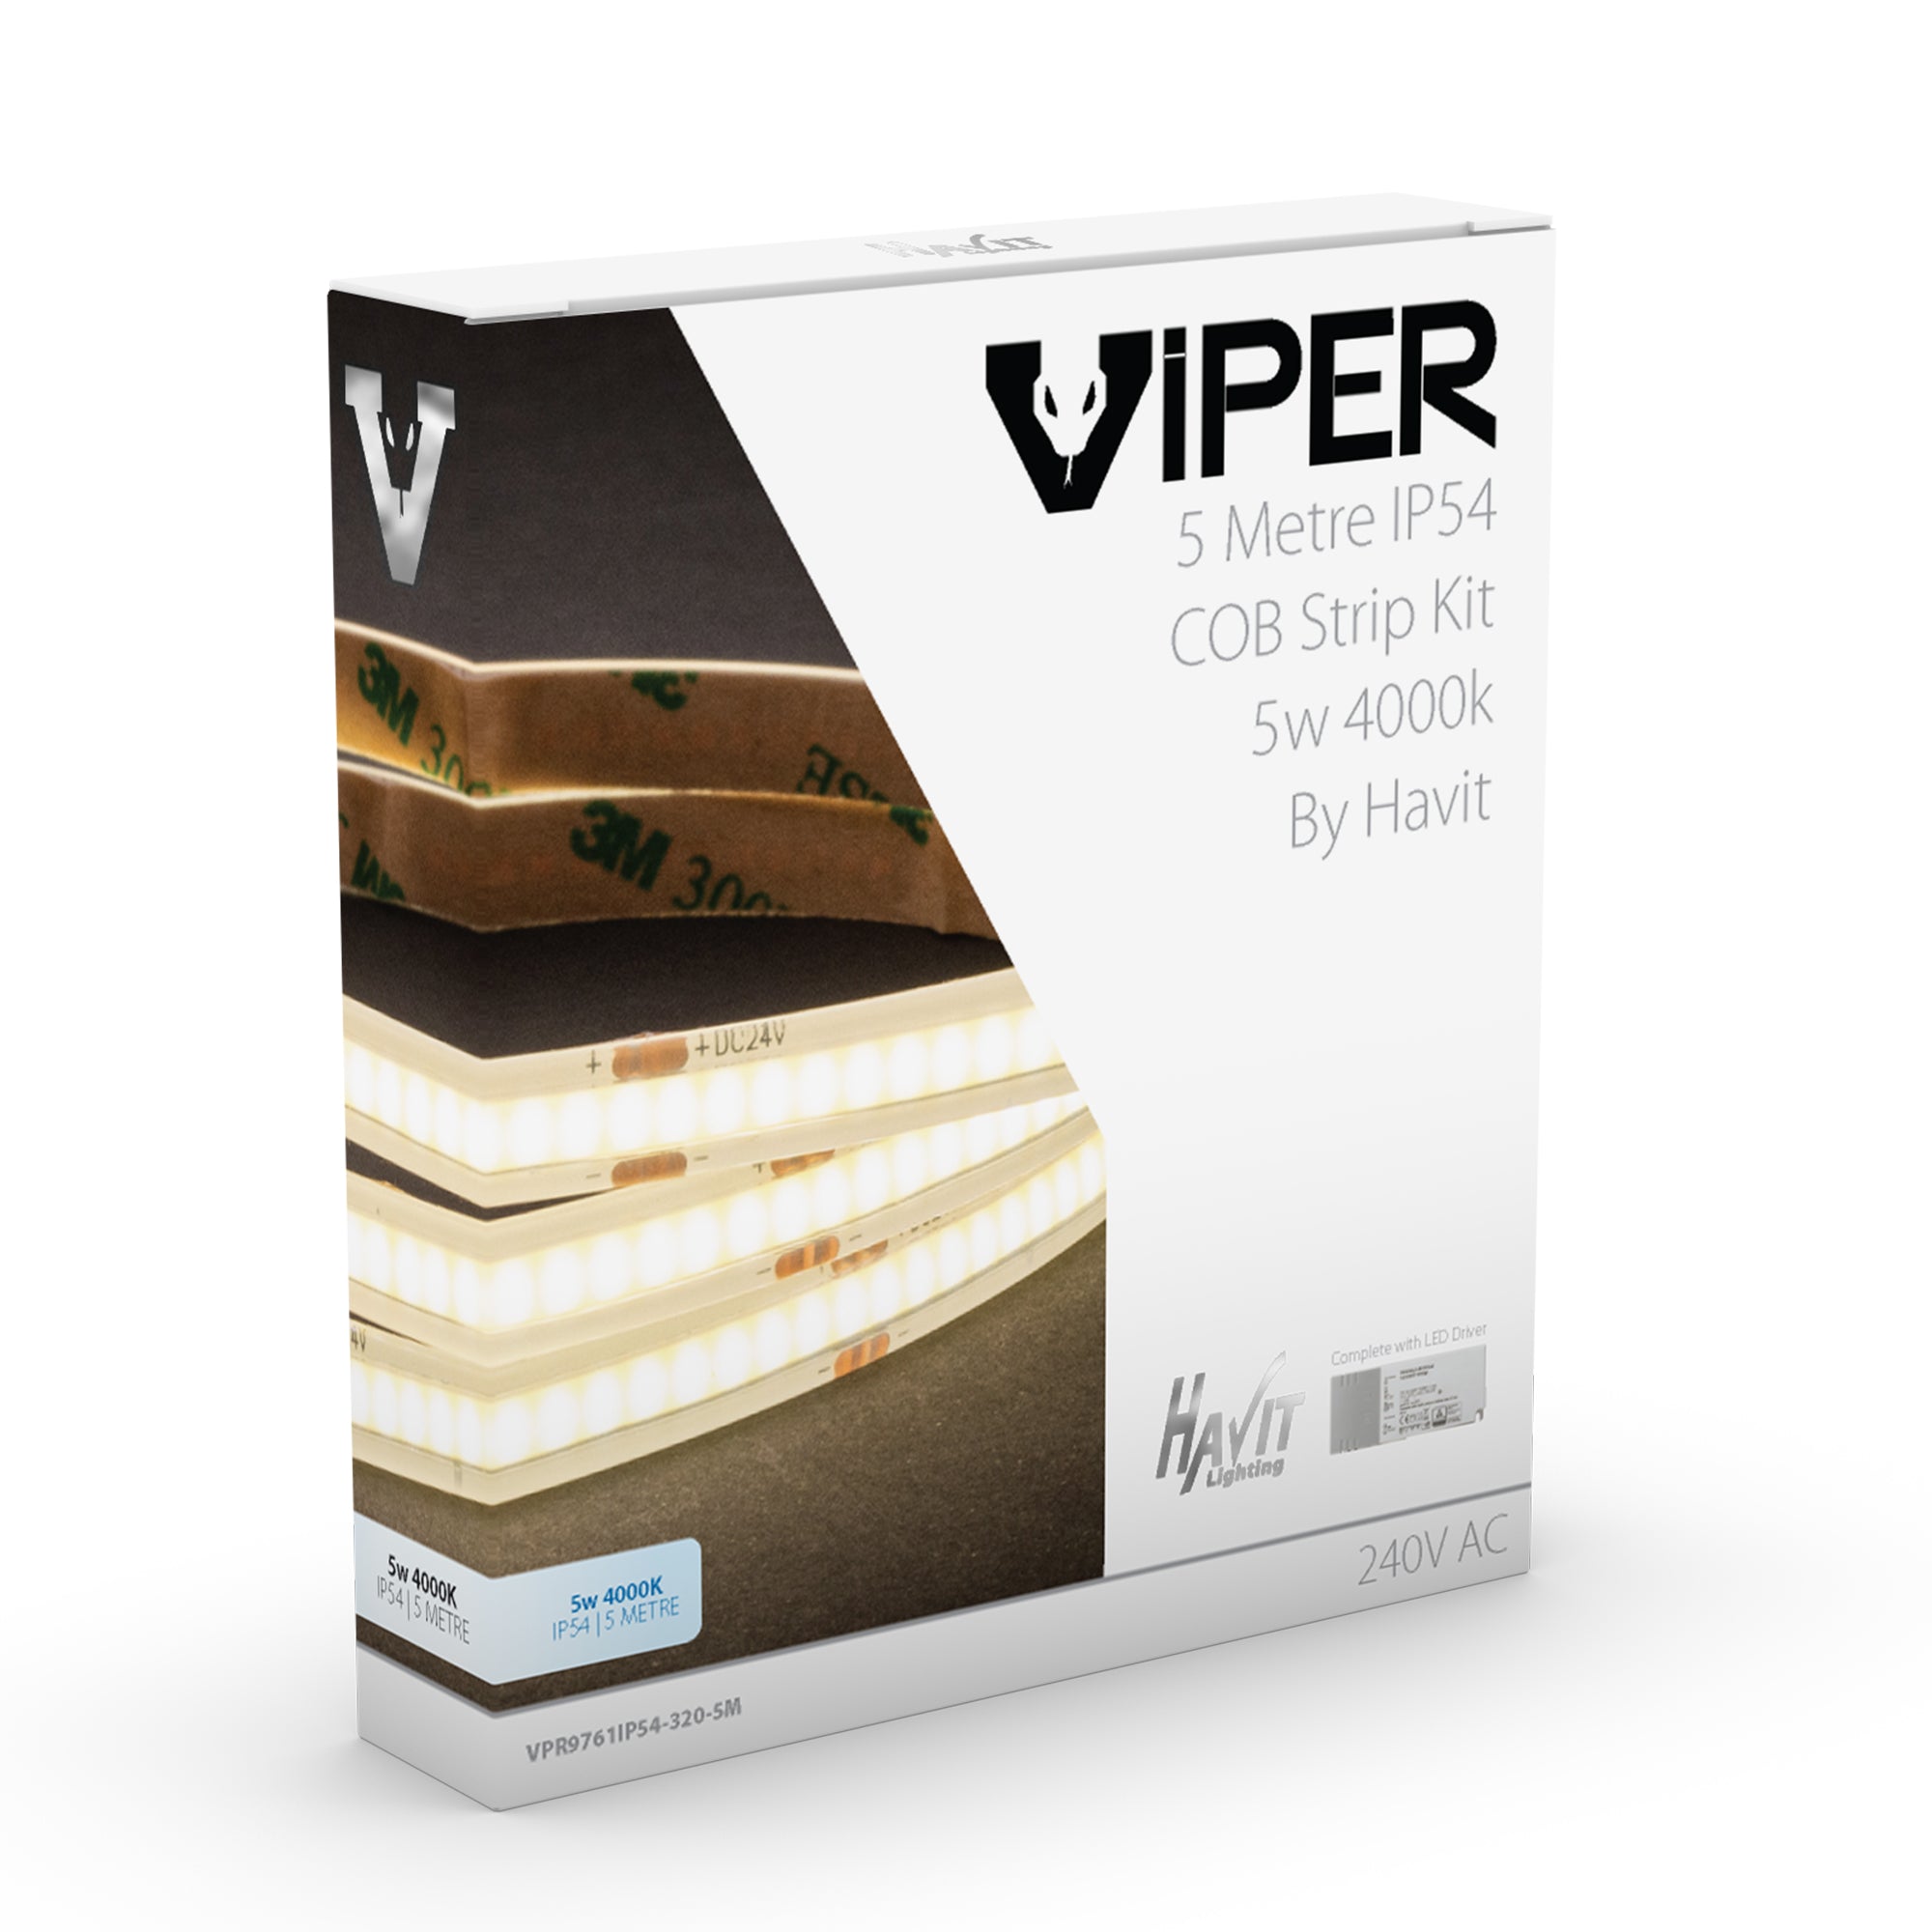 VPR9761IP54-320-5M - Viper COB 5w Per Metre 5m LED Strip kit 4000k